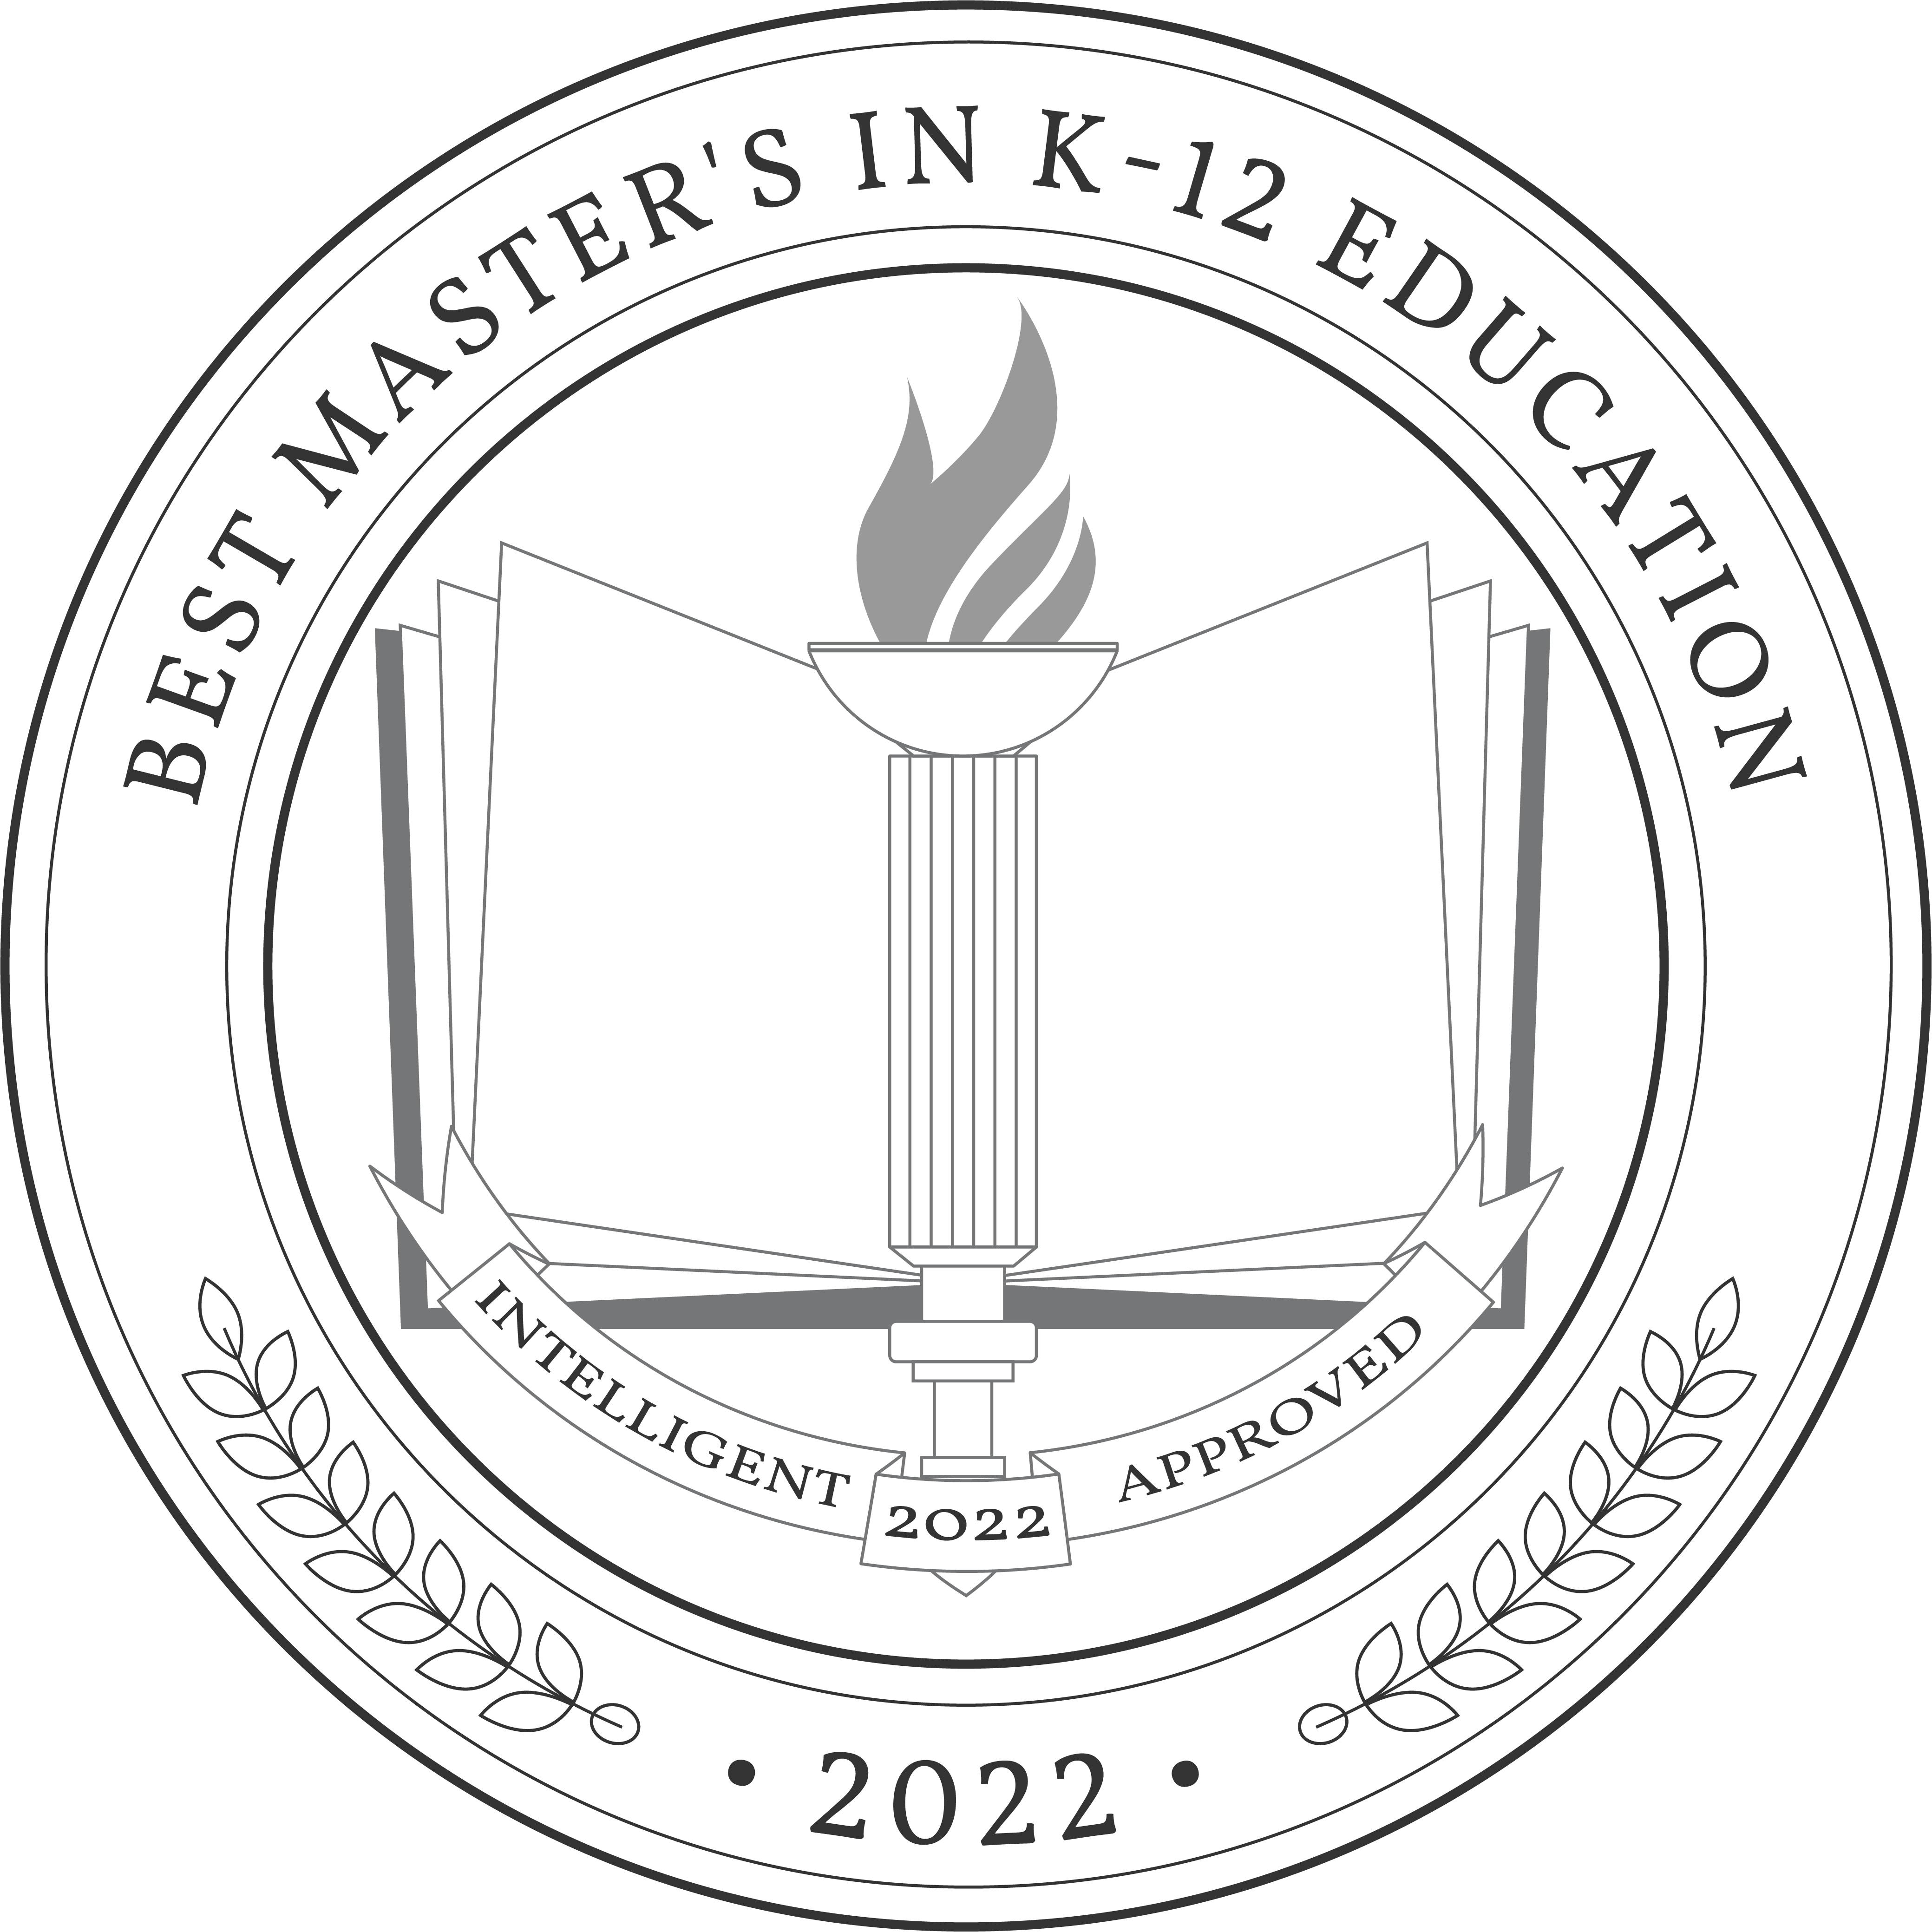 Best Master's in K-12 Education Badge